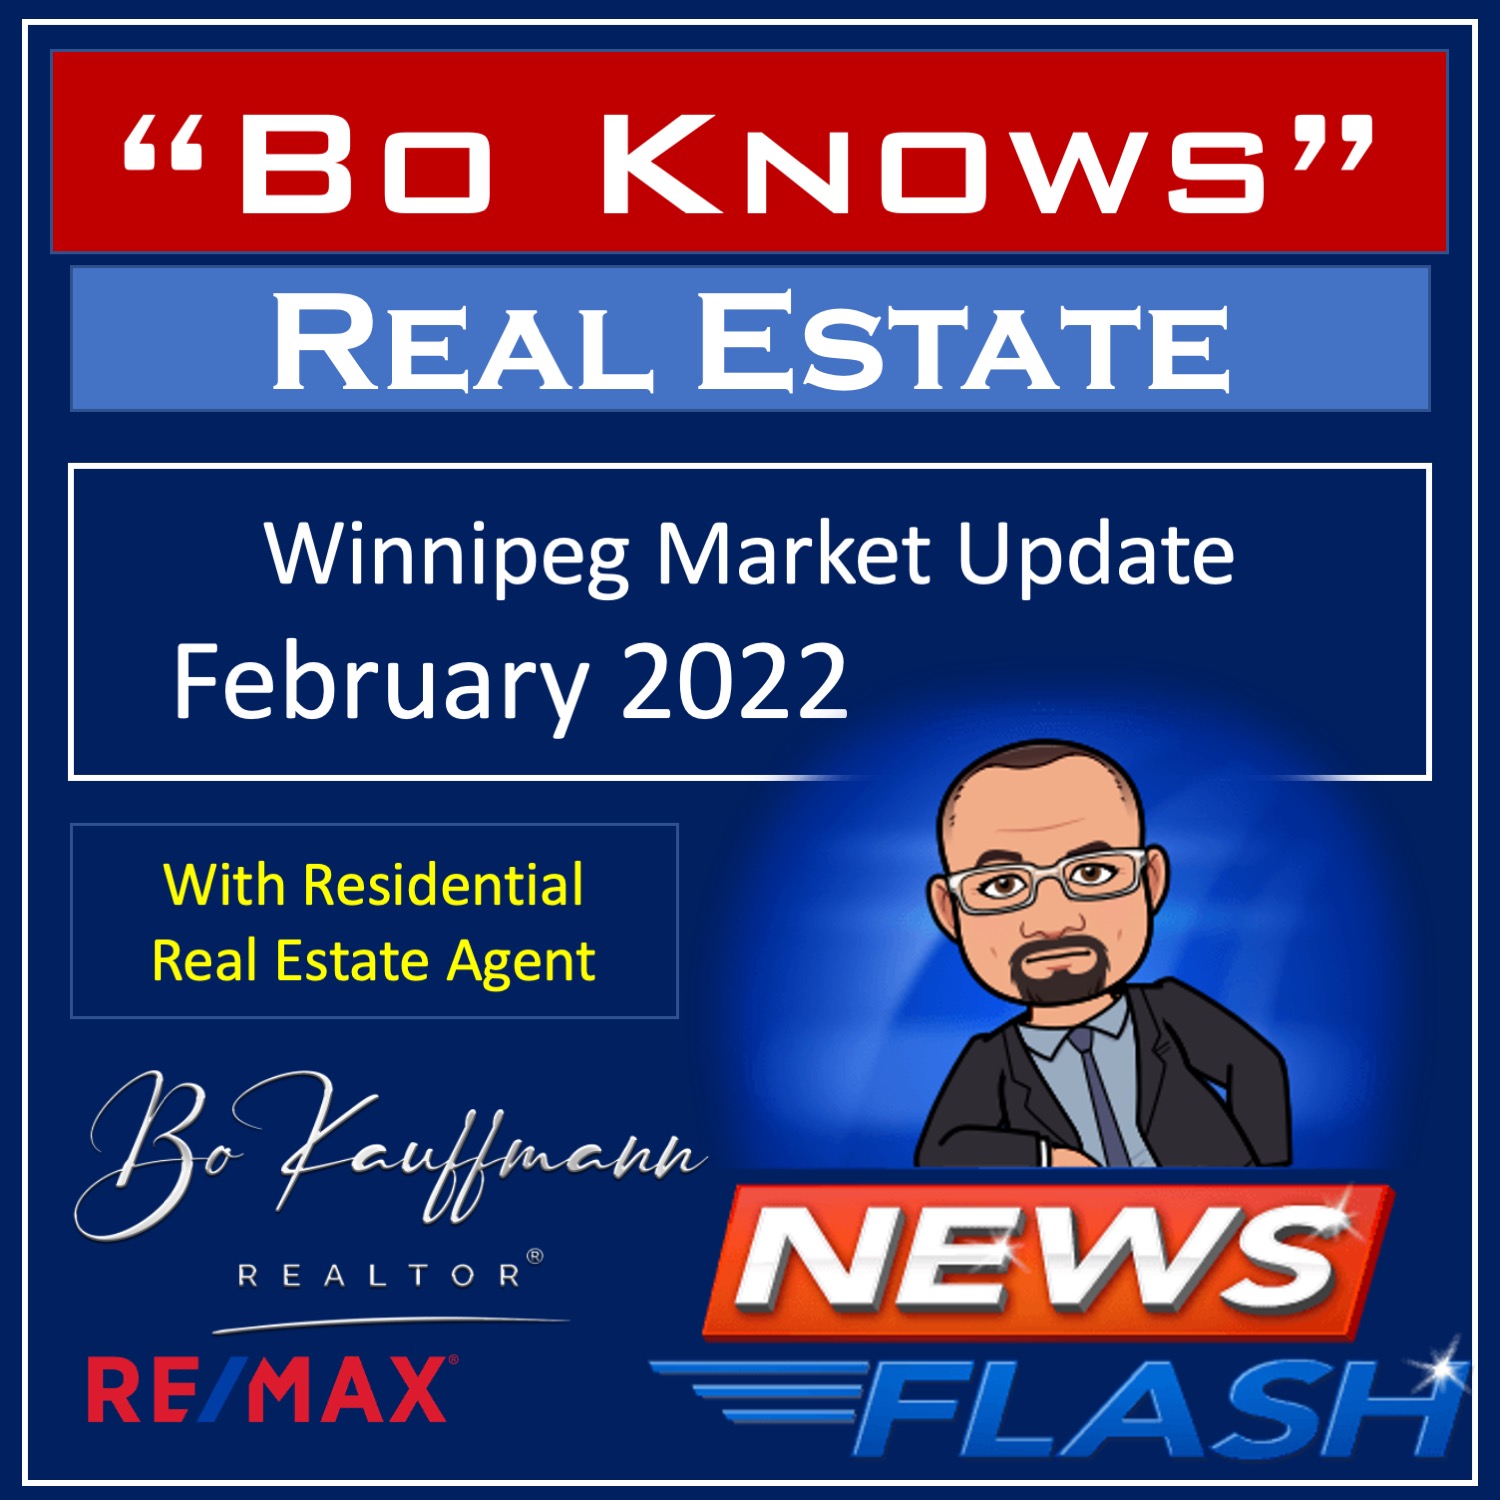 Feb 2022 Winnipeg Real Estate Market Update Quickie Image